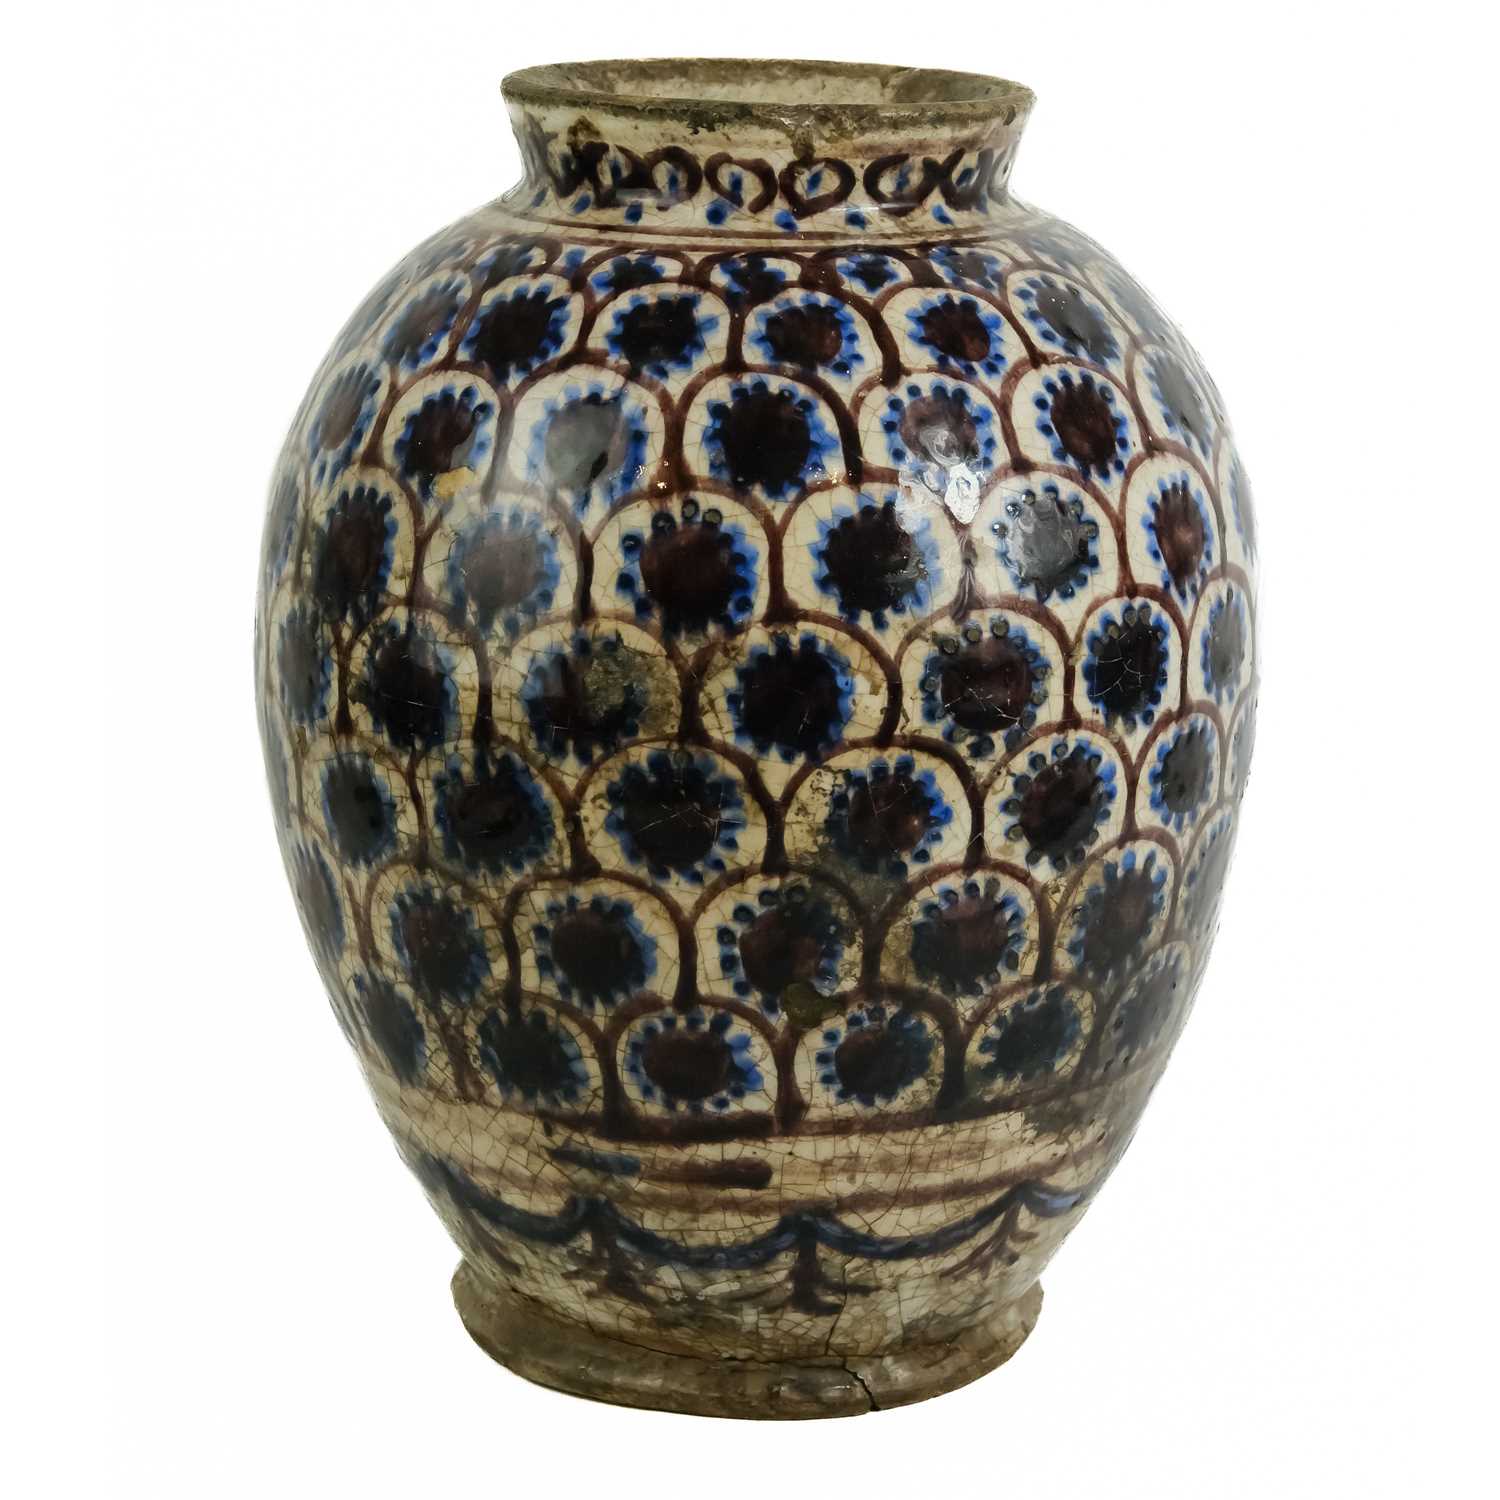 A Persian pottery glazed vase, 16th century.